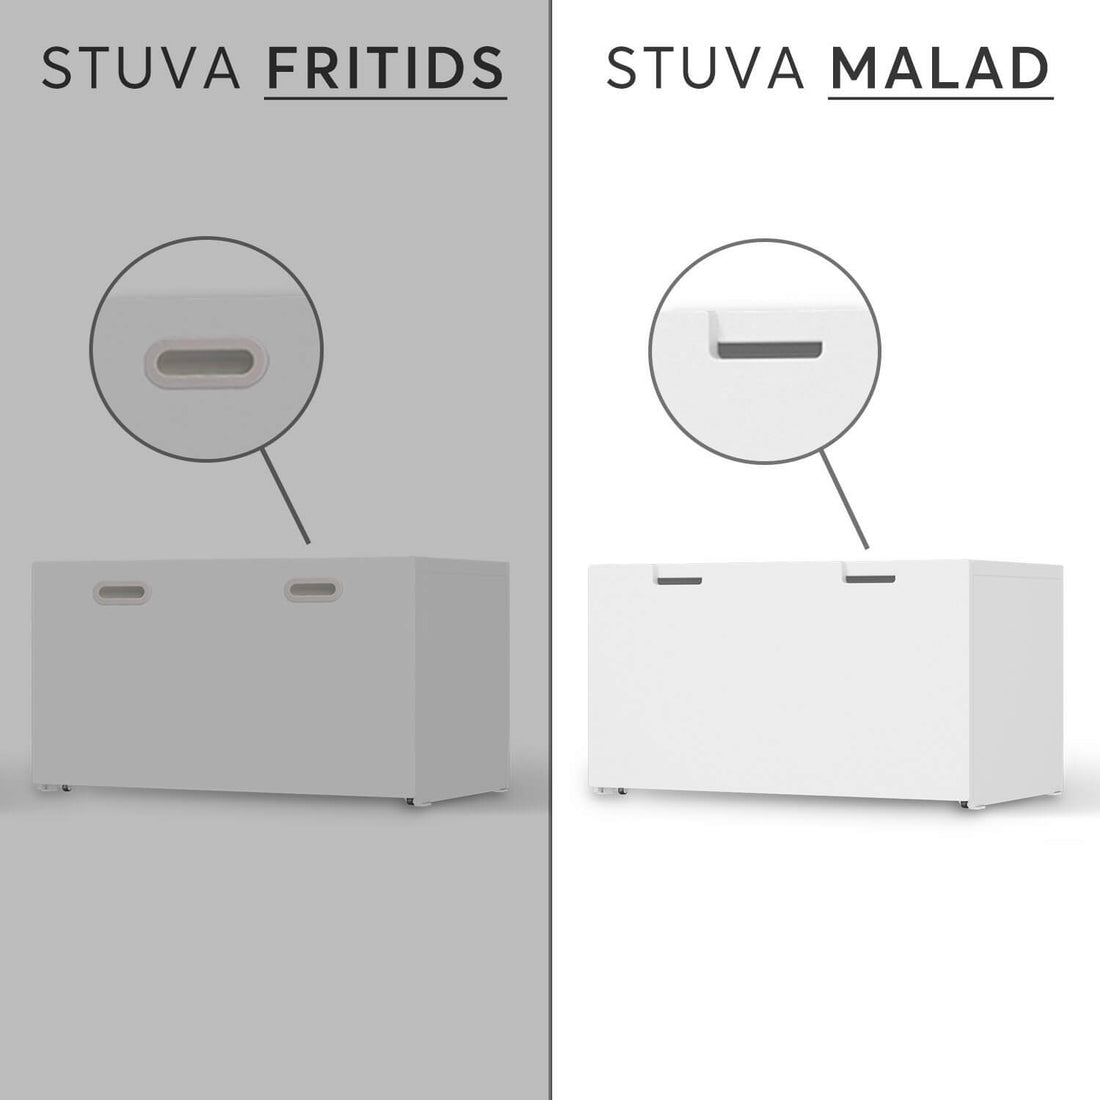 Vergleich IKEA Stuva Malad / Fritids - Bangkok Sunset